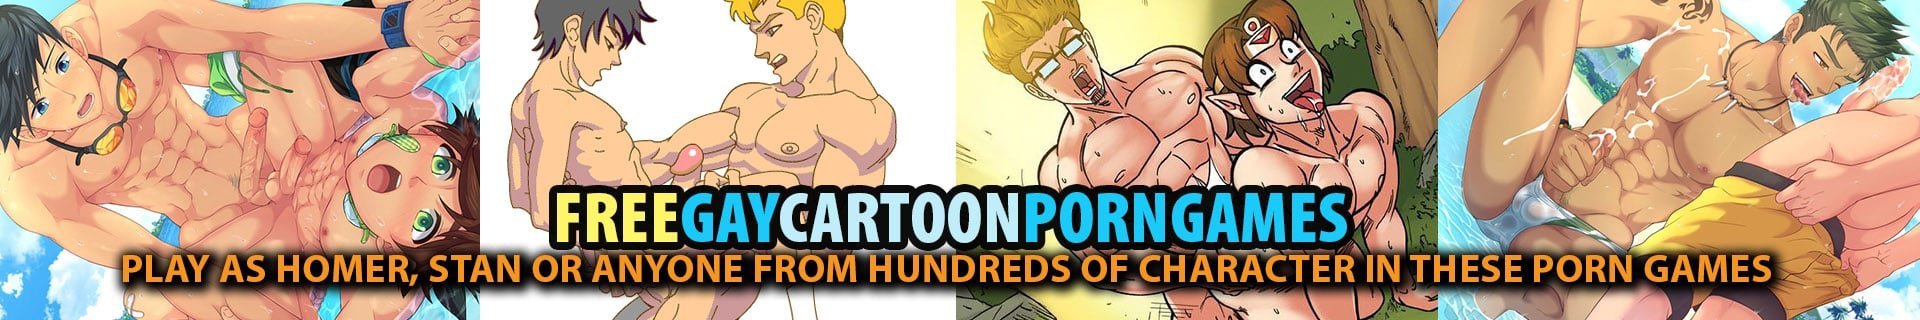 Free Cartoon Porn Games